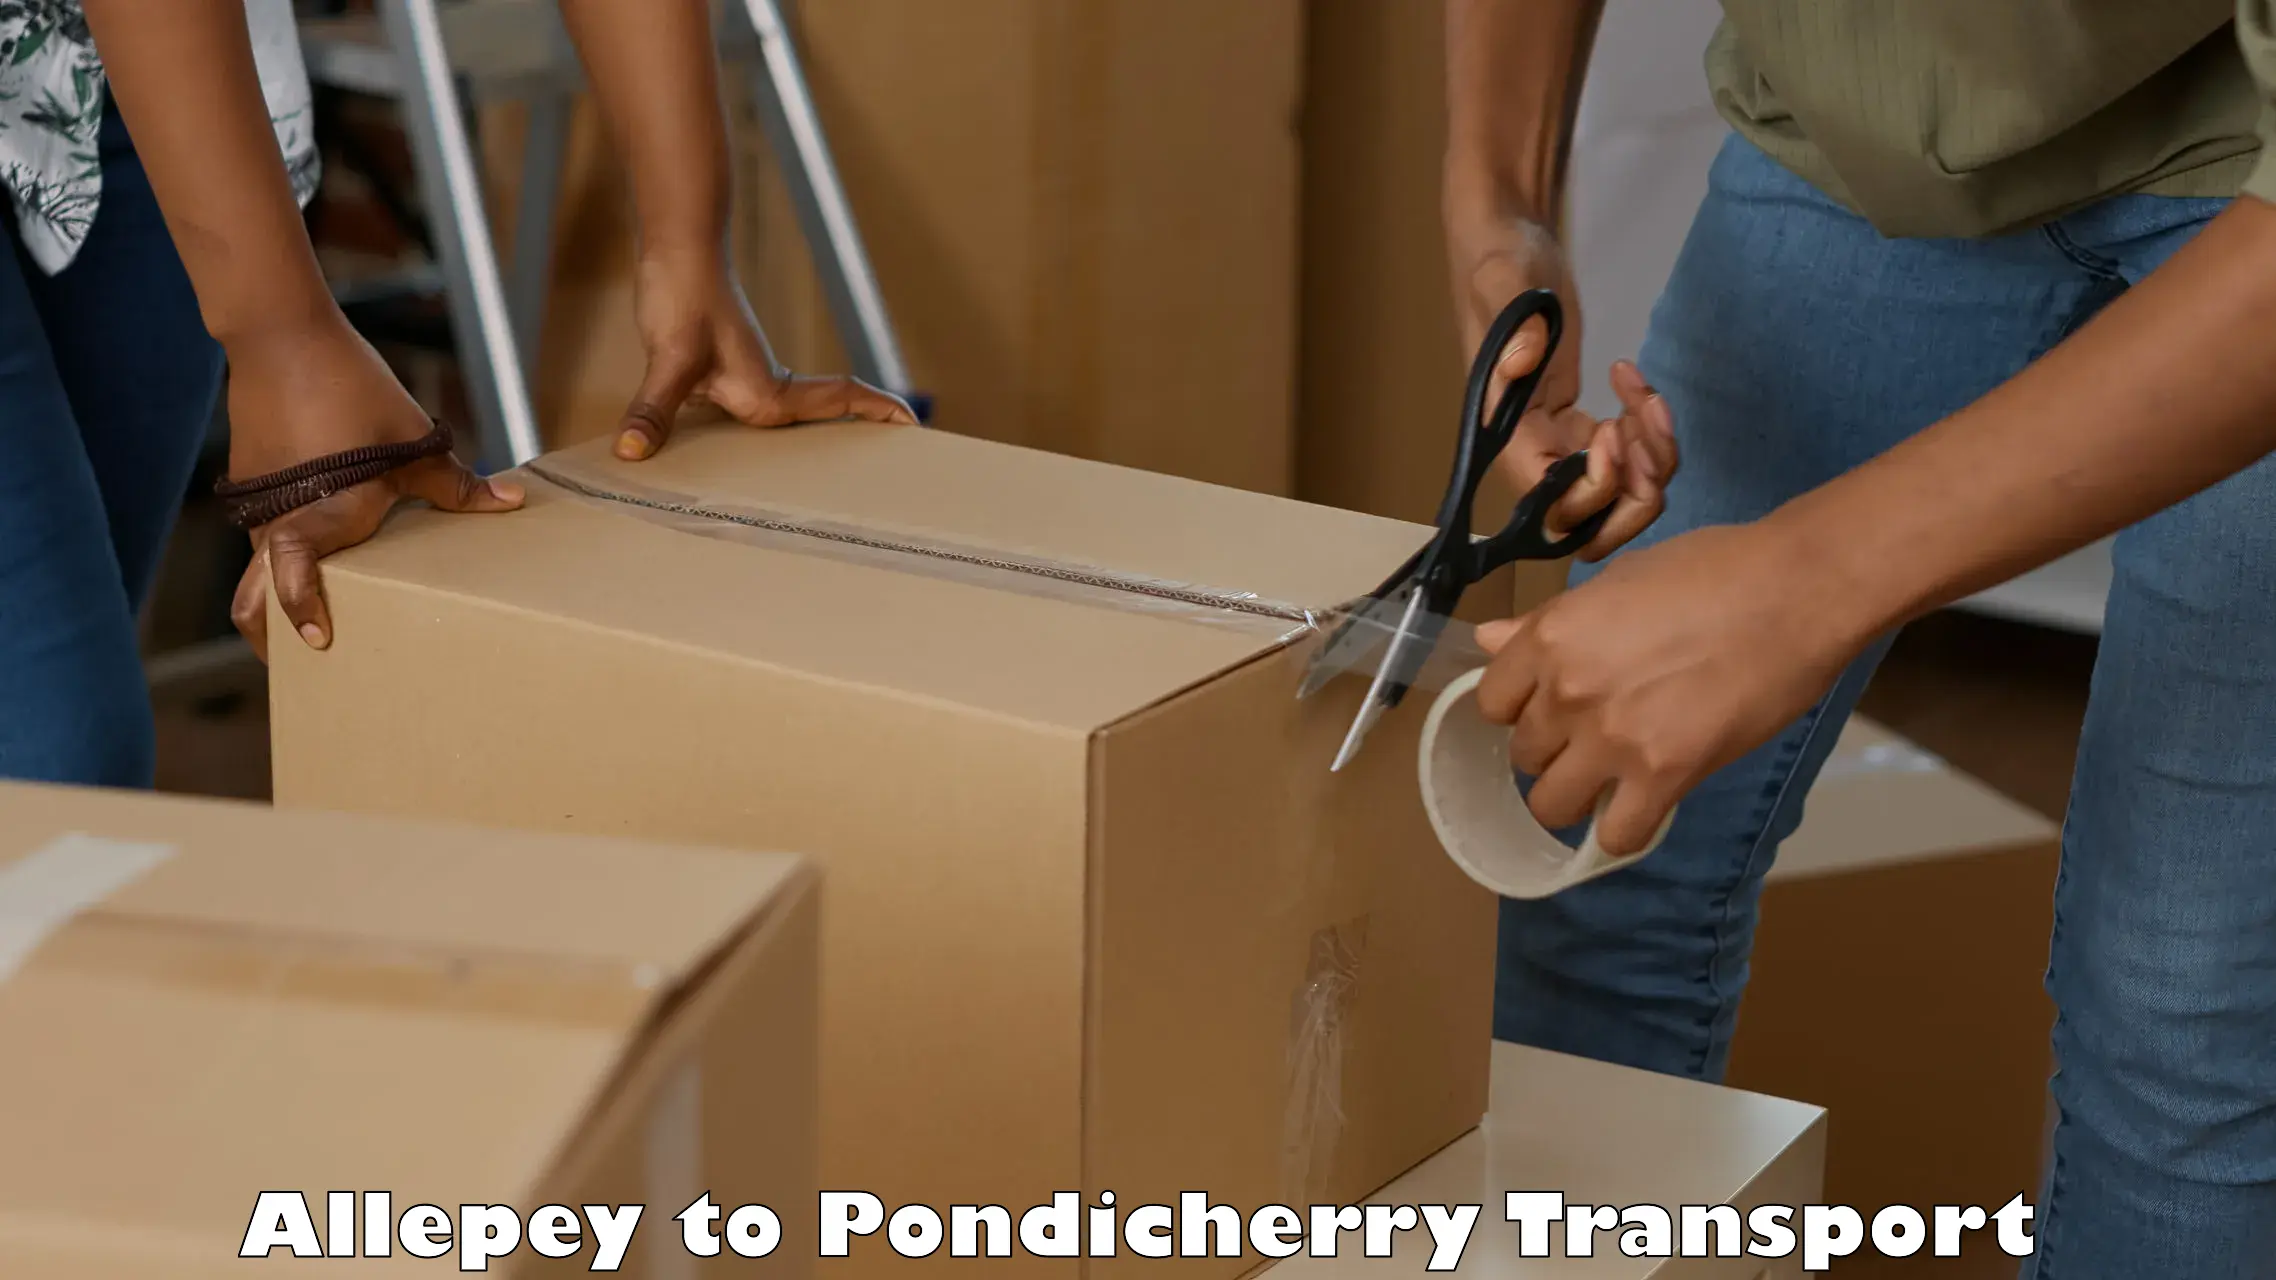 Furniture transport service Allepey to Pondicherry University